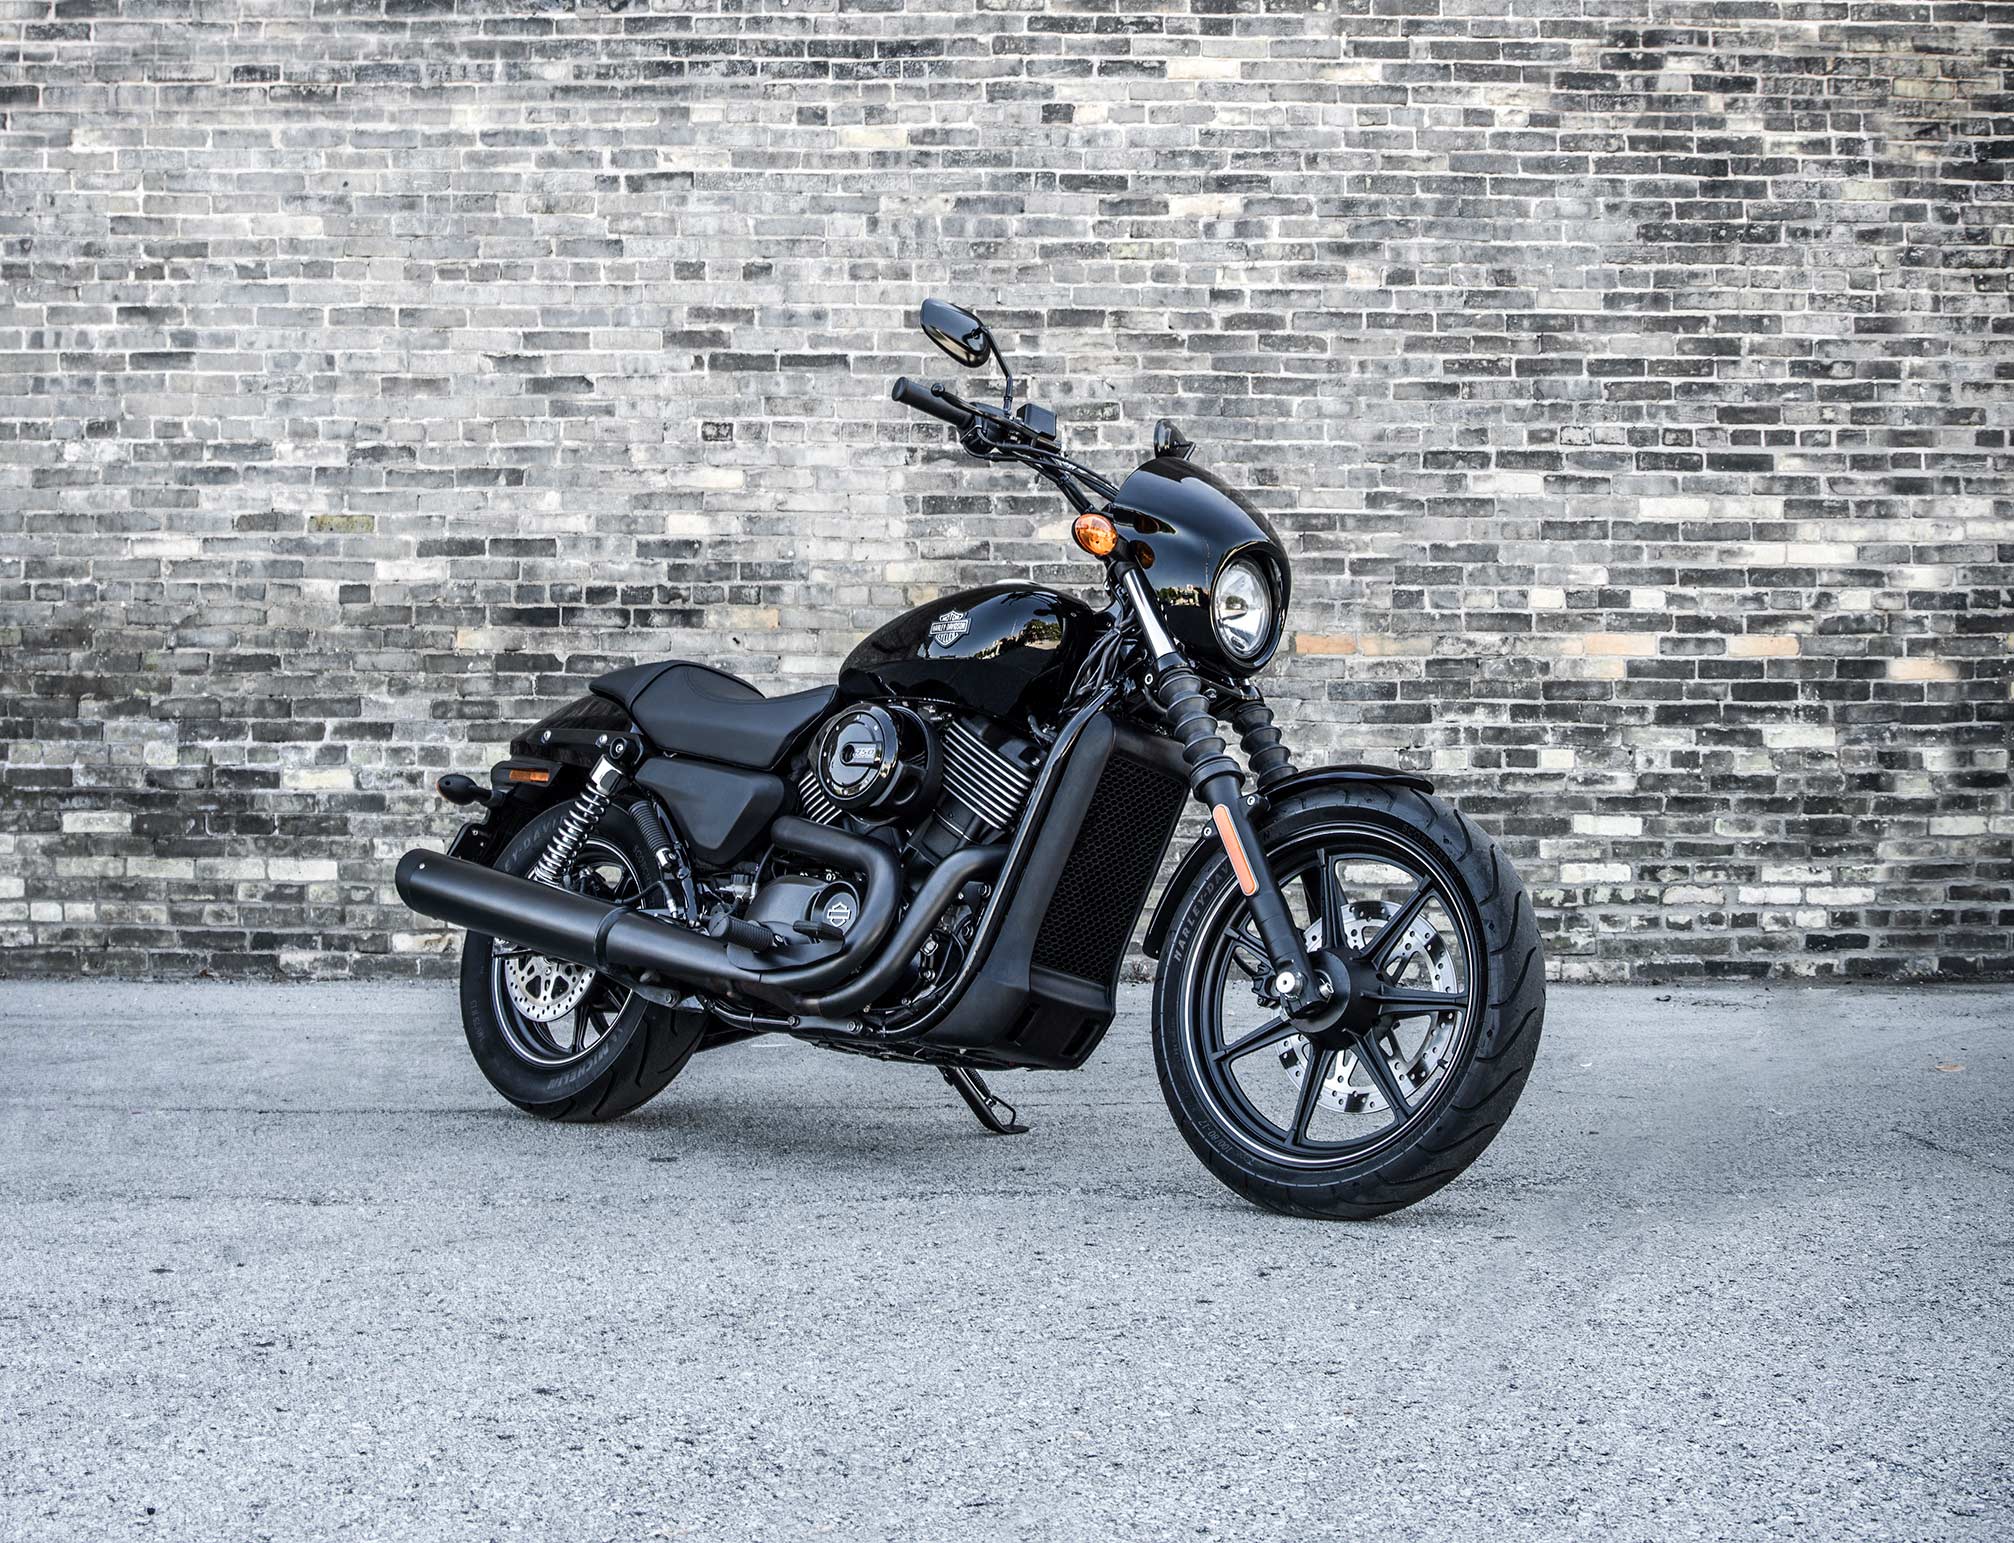 2014 Harley Davidson Street 750 Review